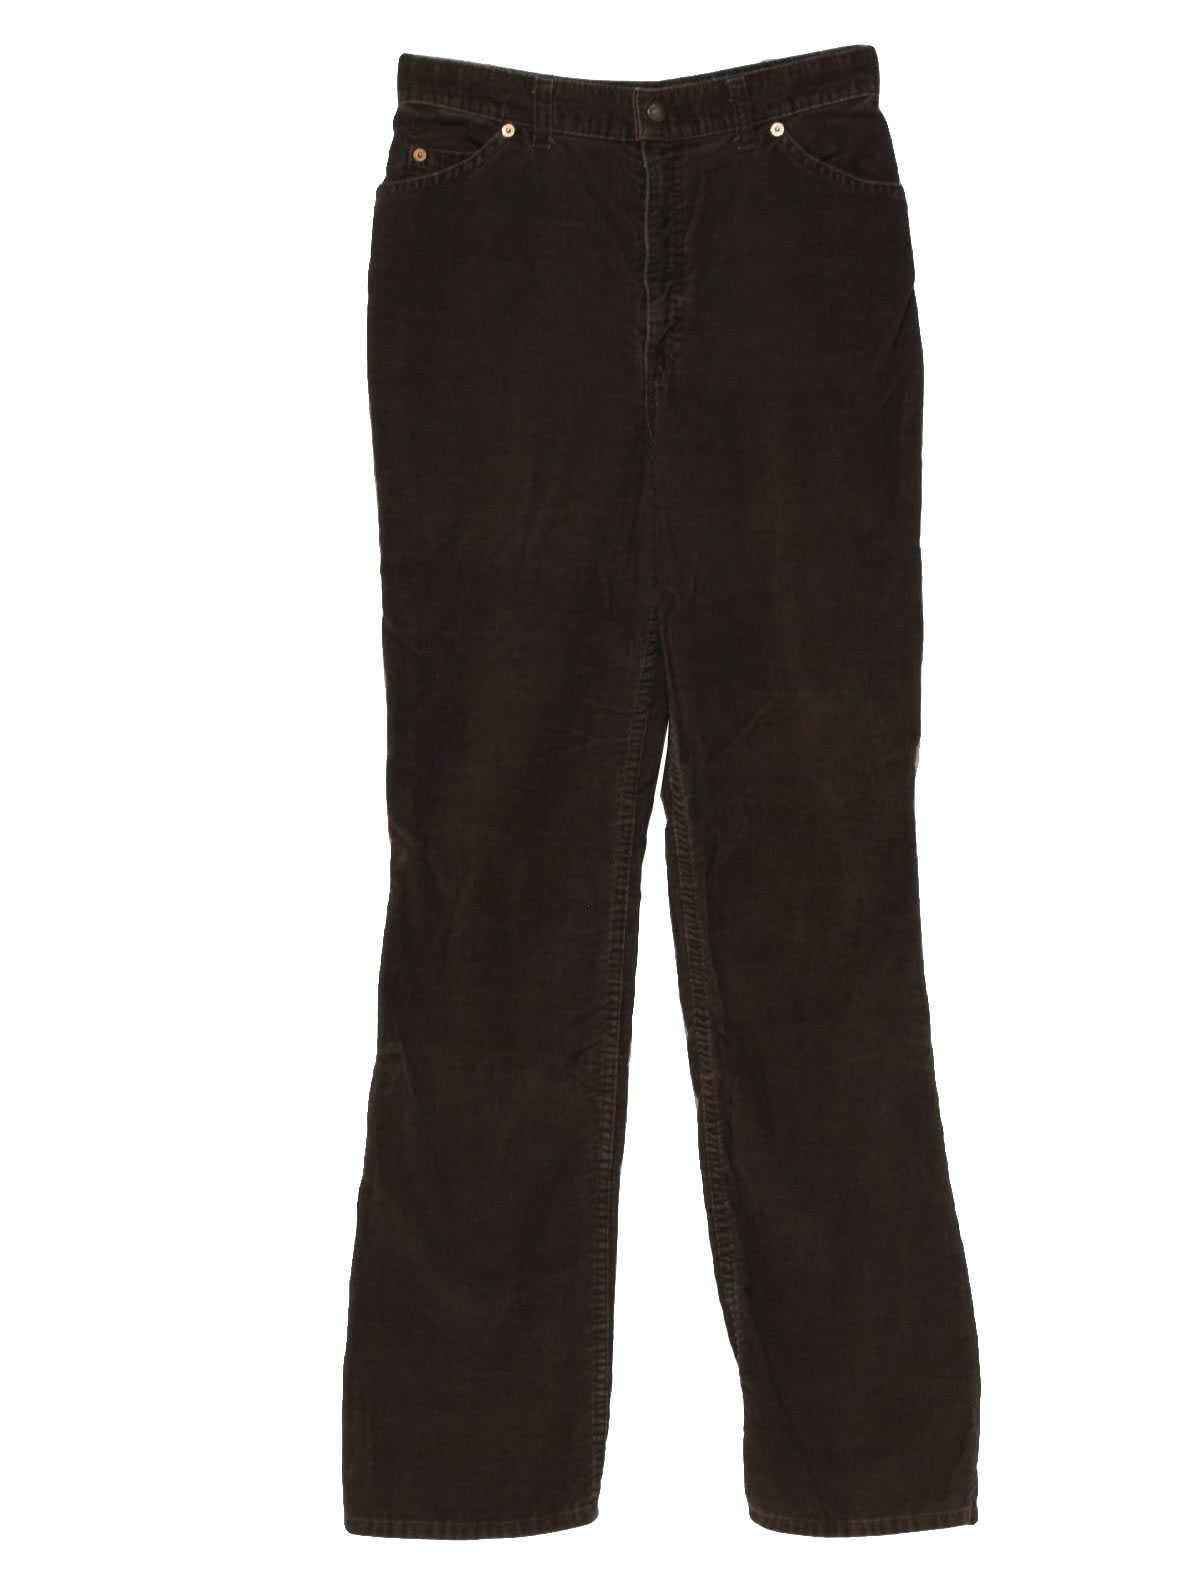 1980's Retro Pants: 80s -Levis- Womens dark brown cotton corduroy ...